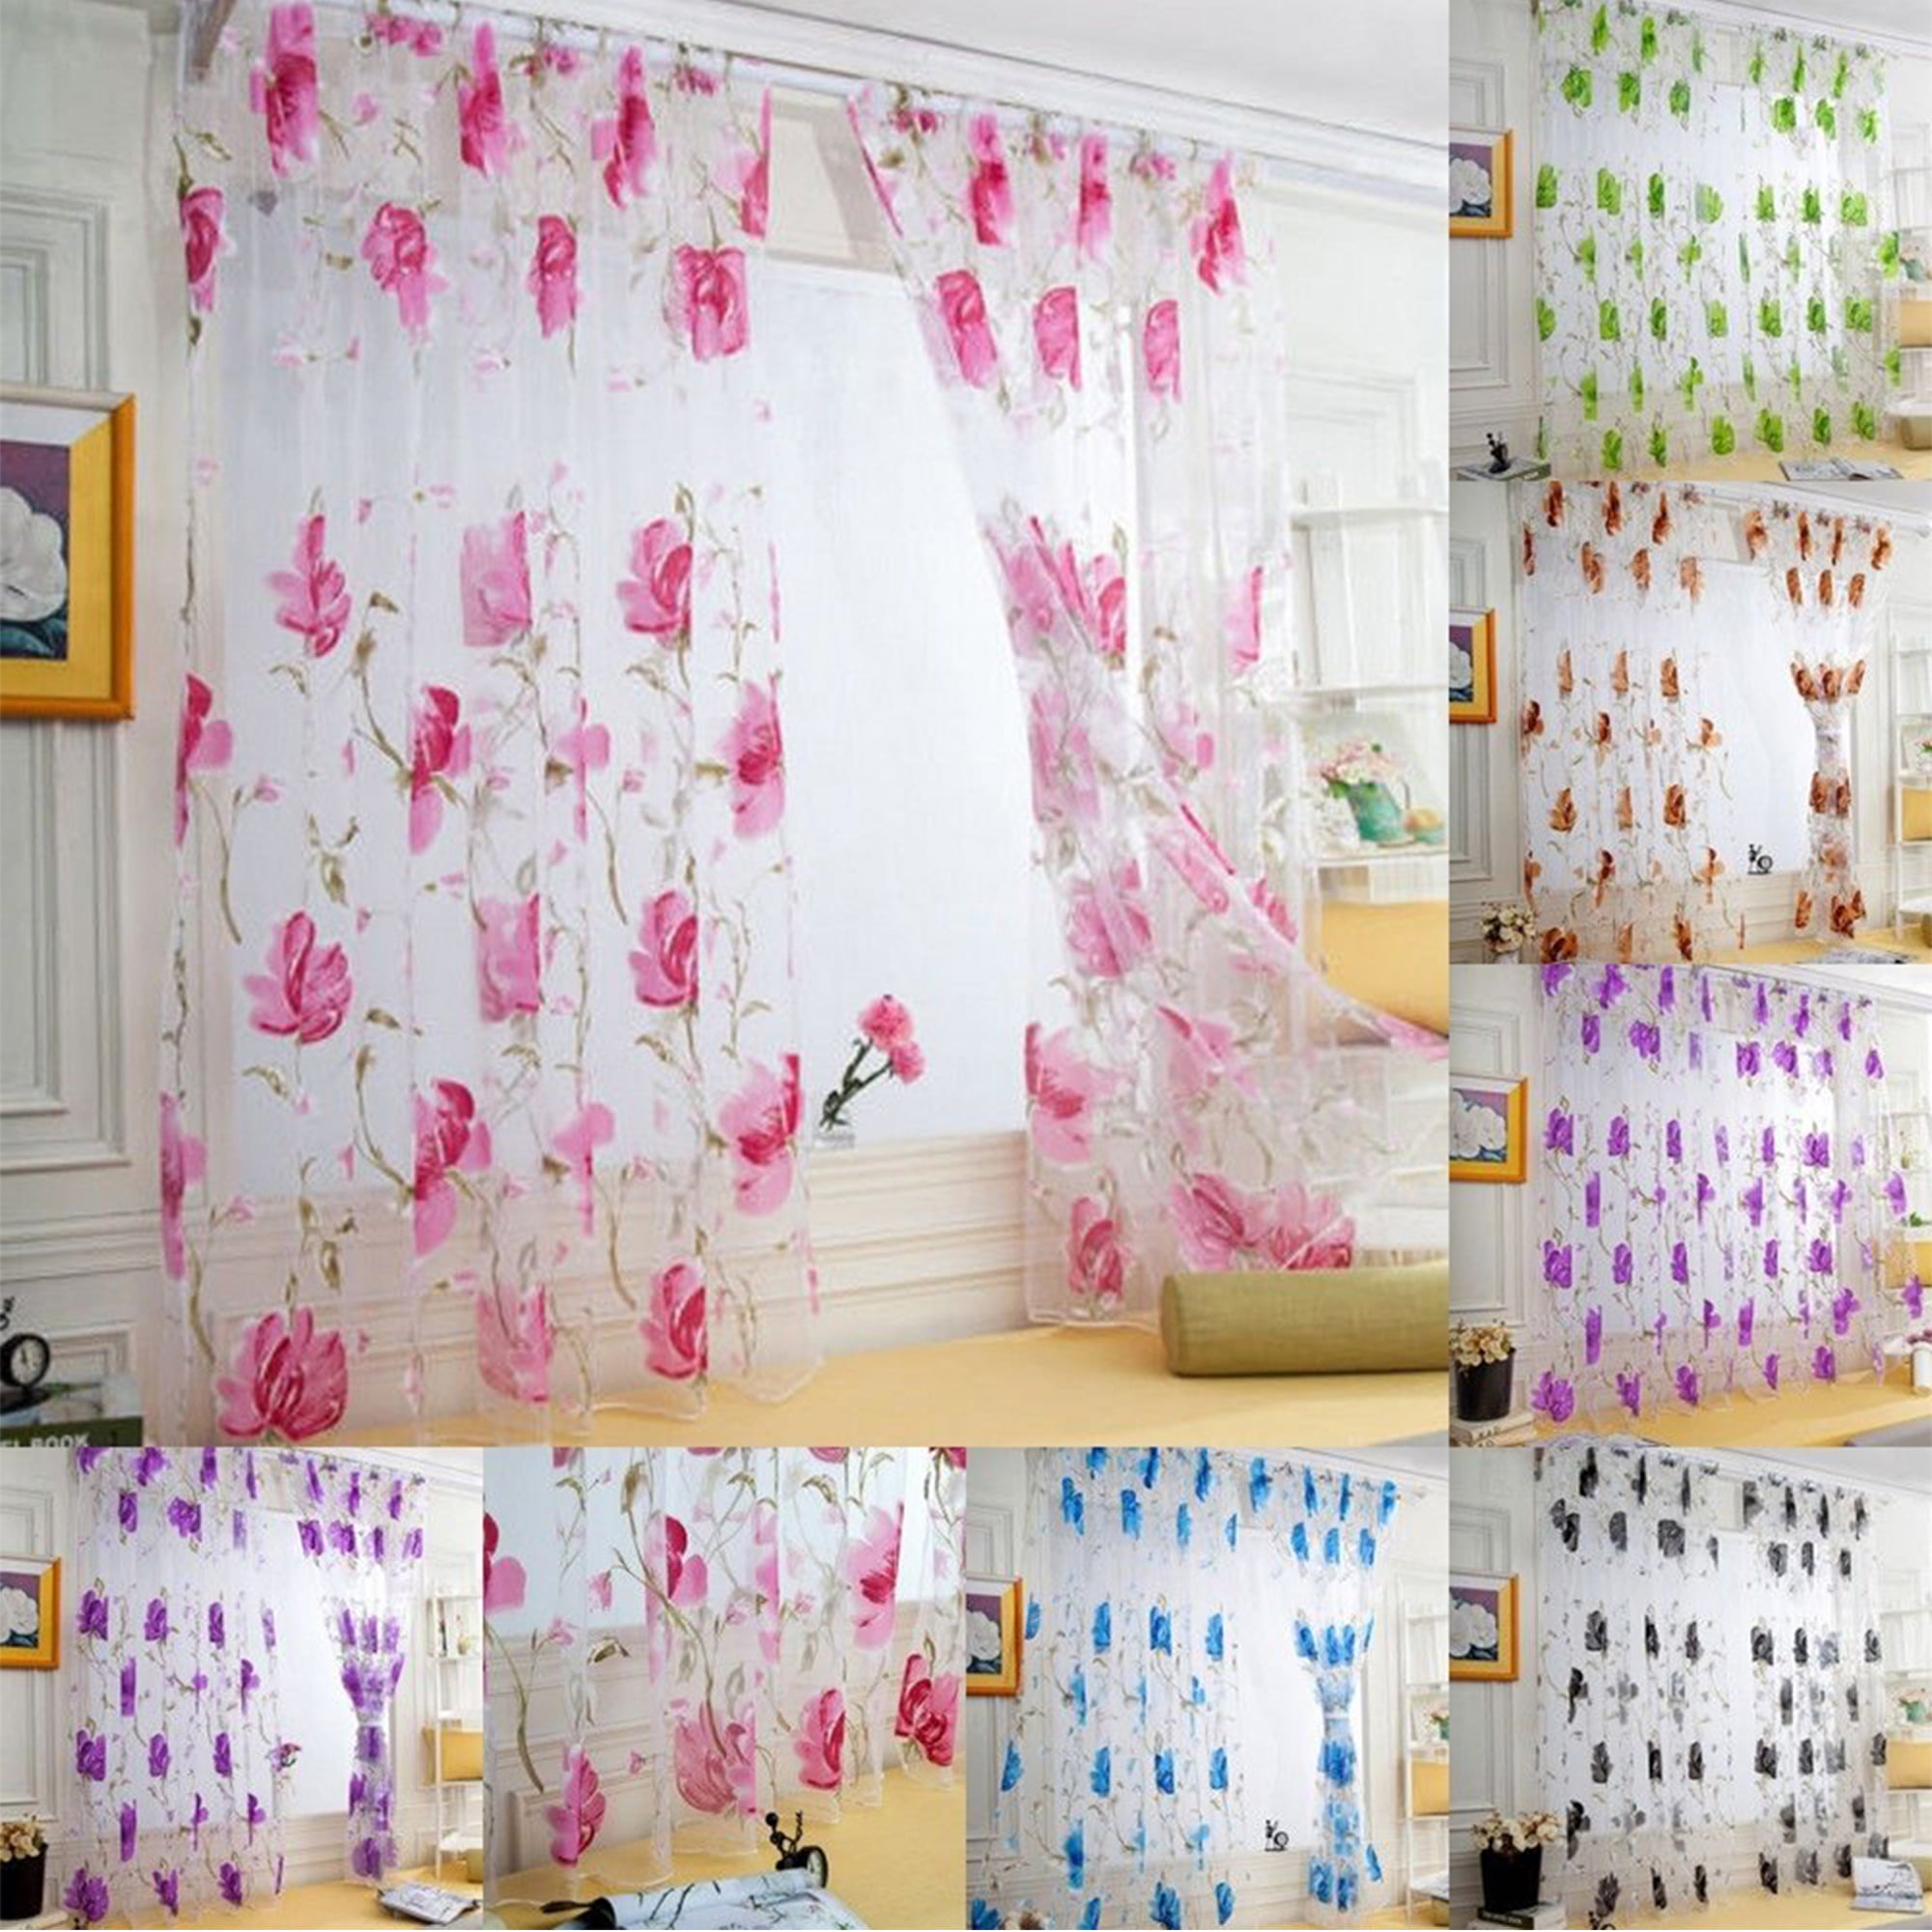 NEW Multi Colors Tulle Voile Door Window Curtain Sheer Valances Room Drape Panel 